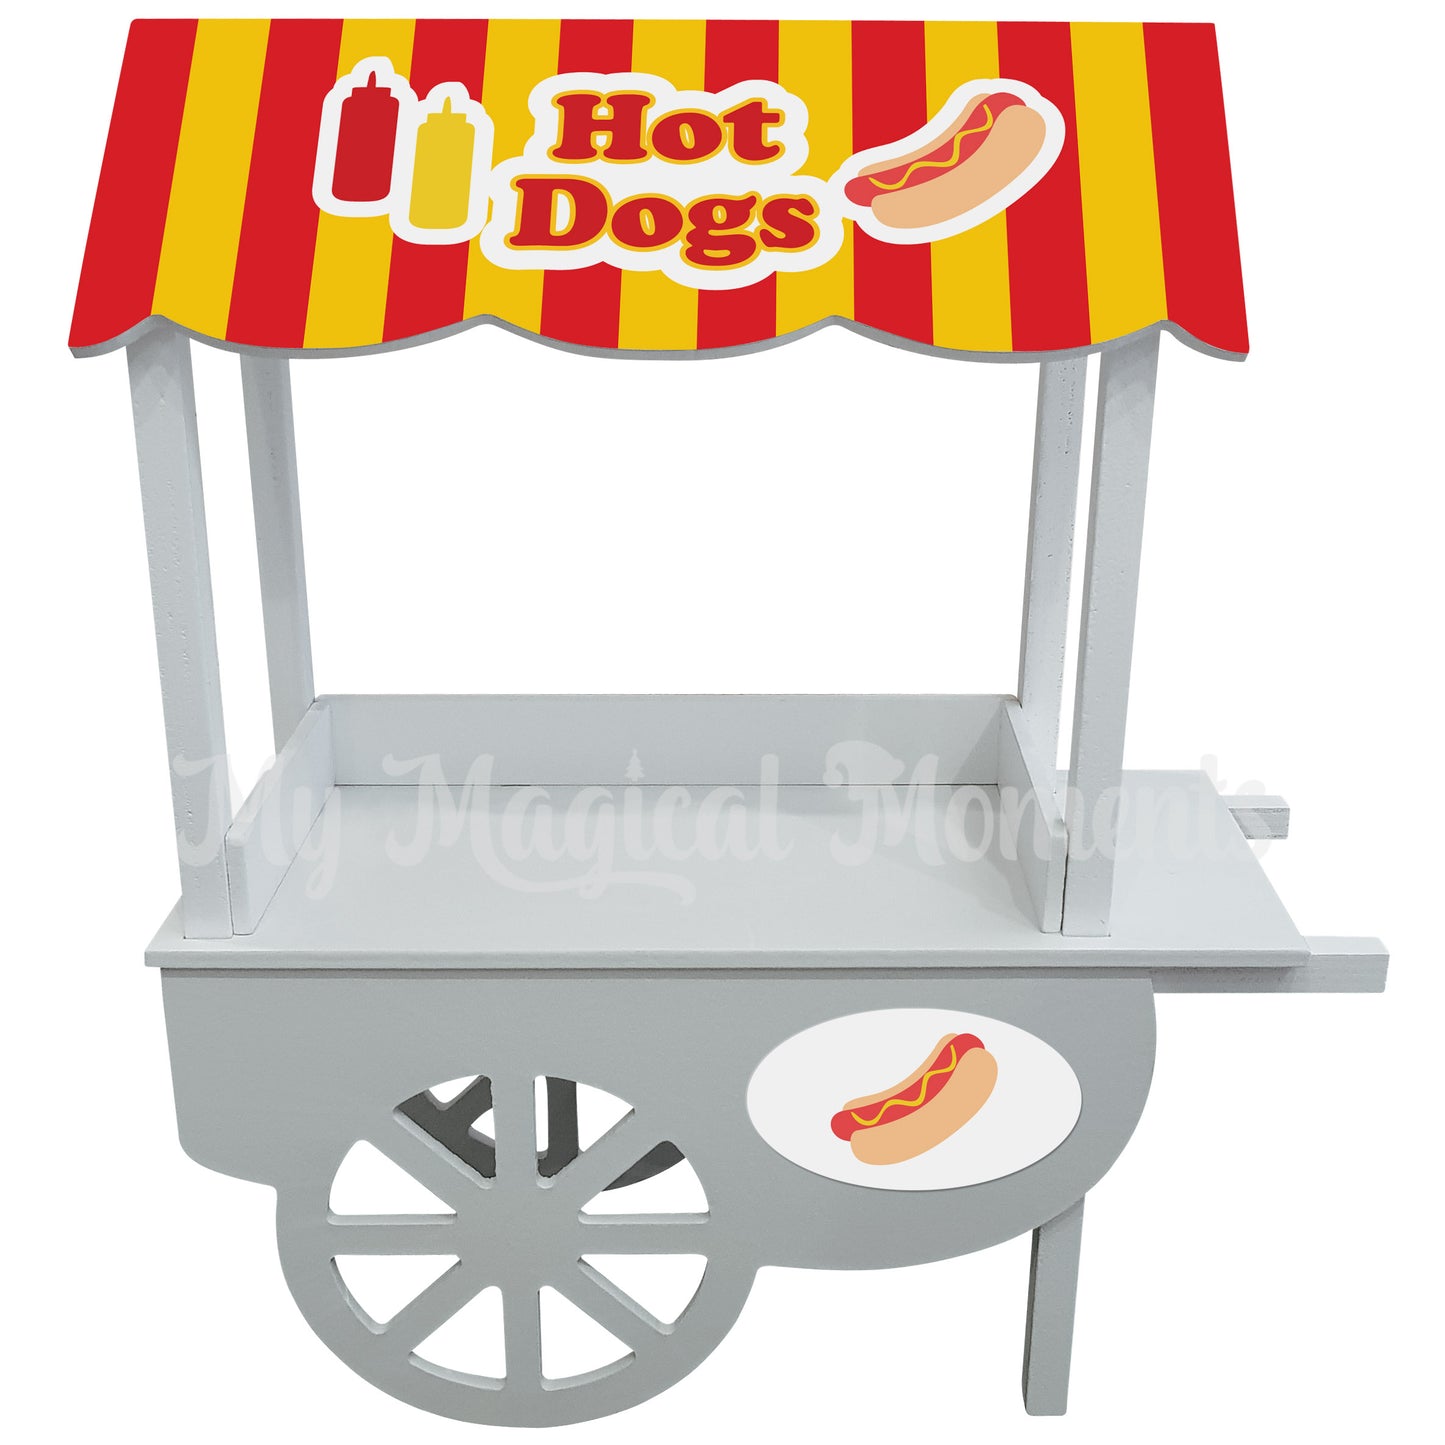 Miniature hot dog stand